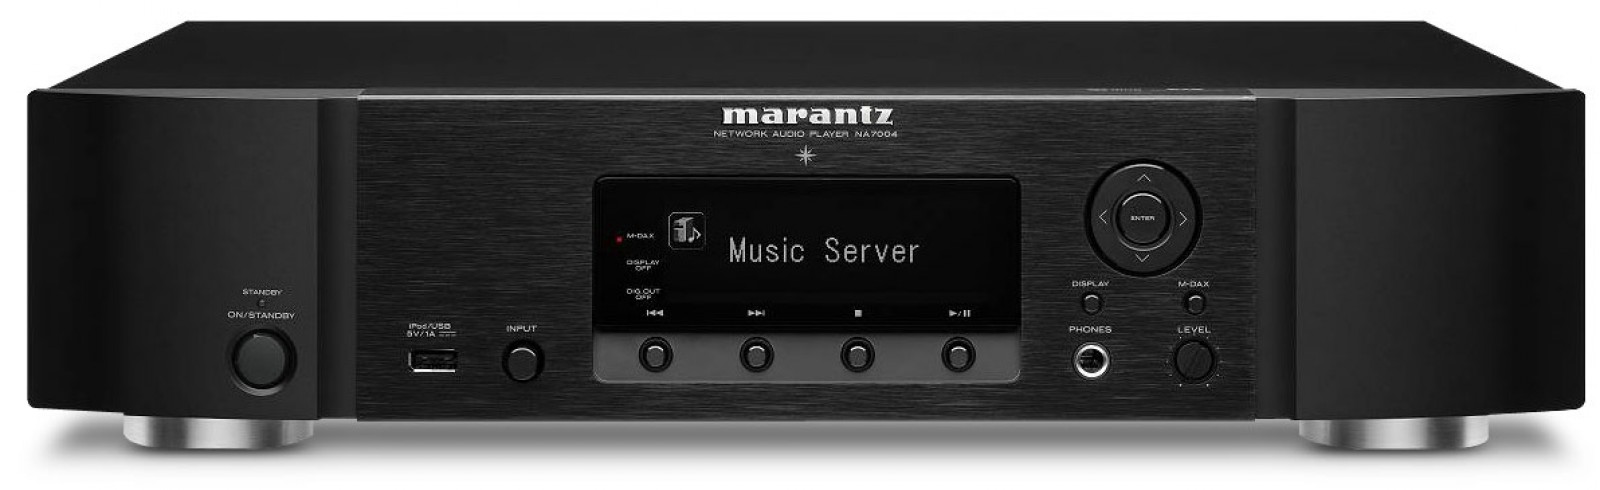 Radio Internet Radios Support Marantz Internet Radio Models How to stream your classical baroque music.